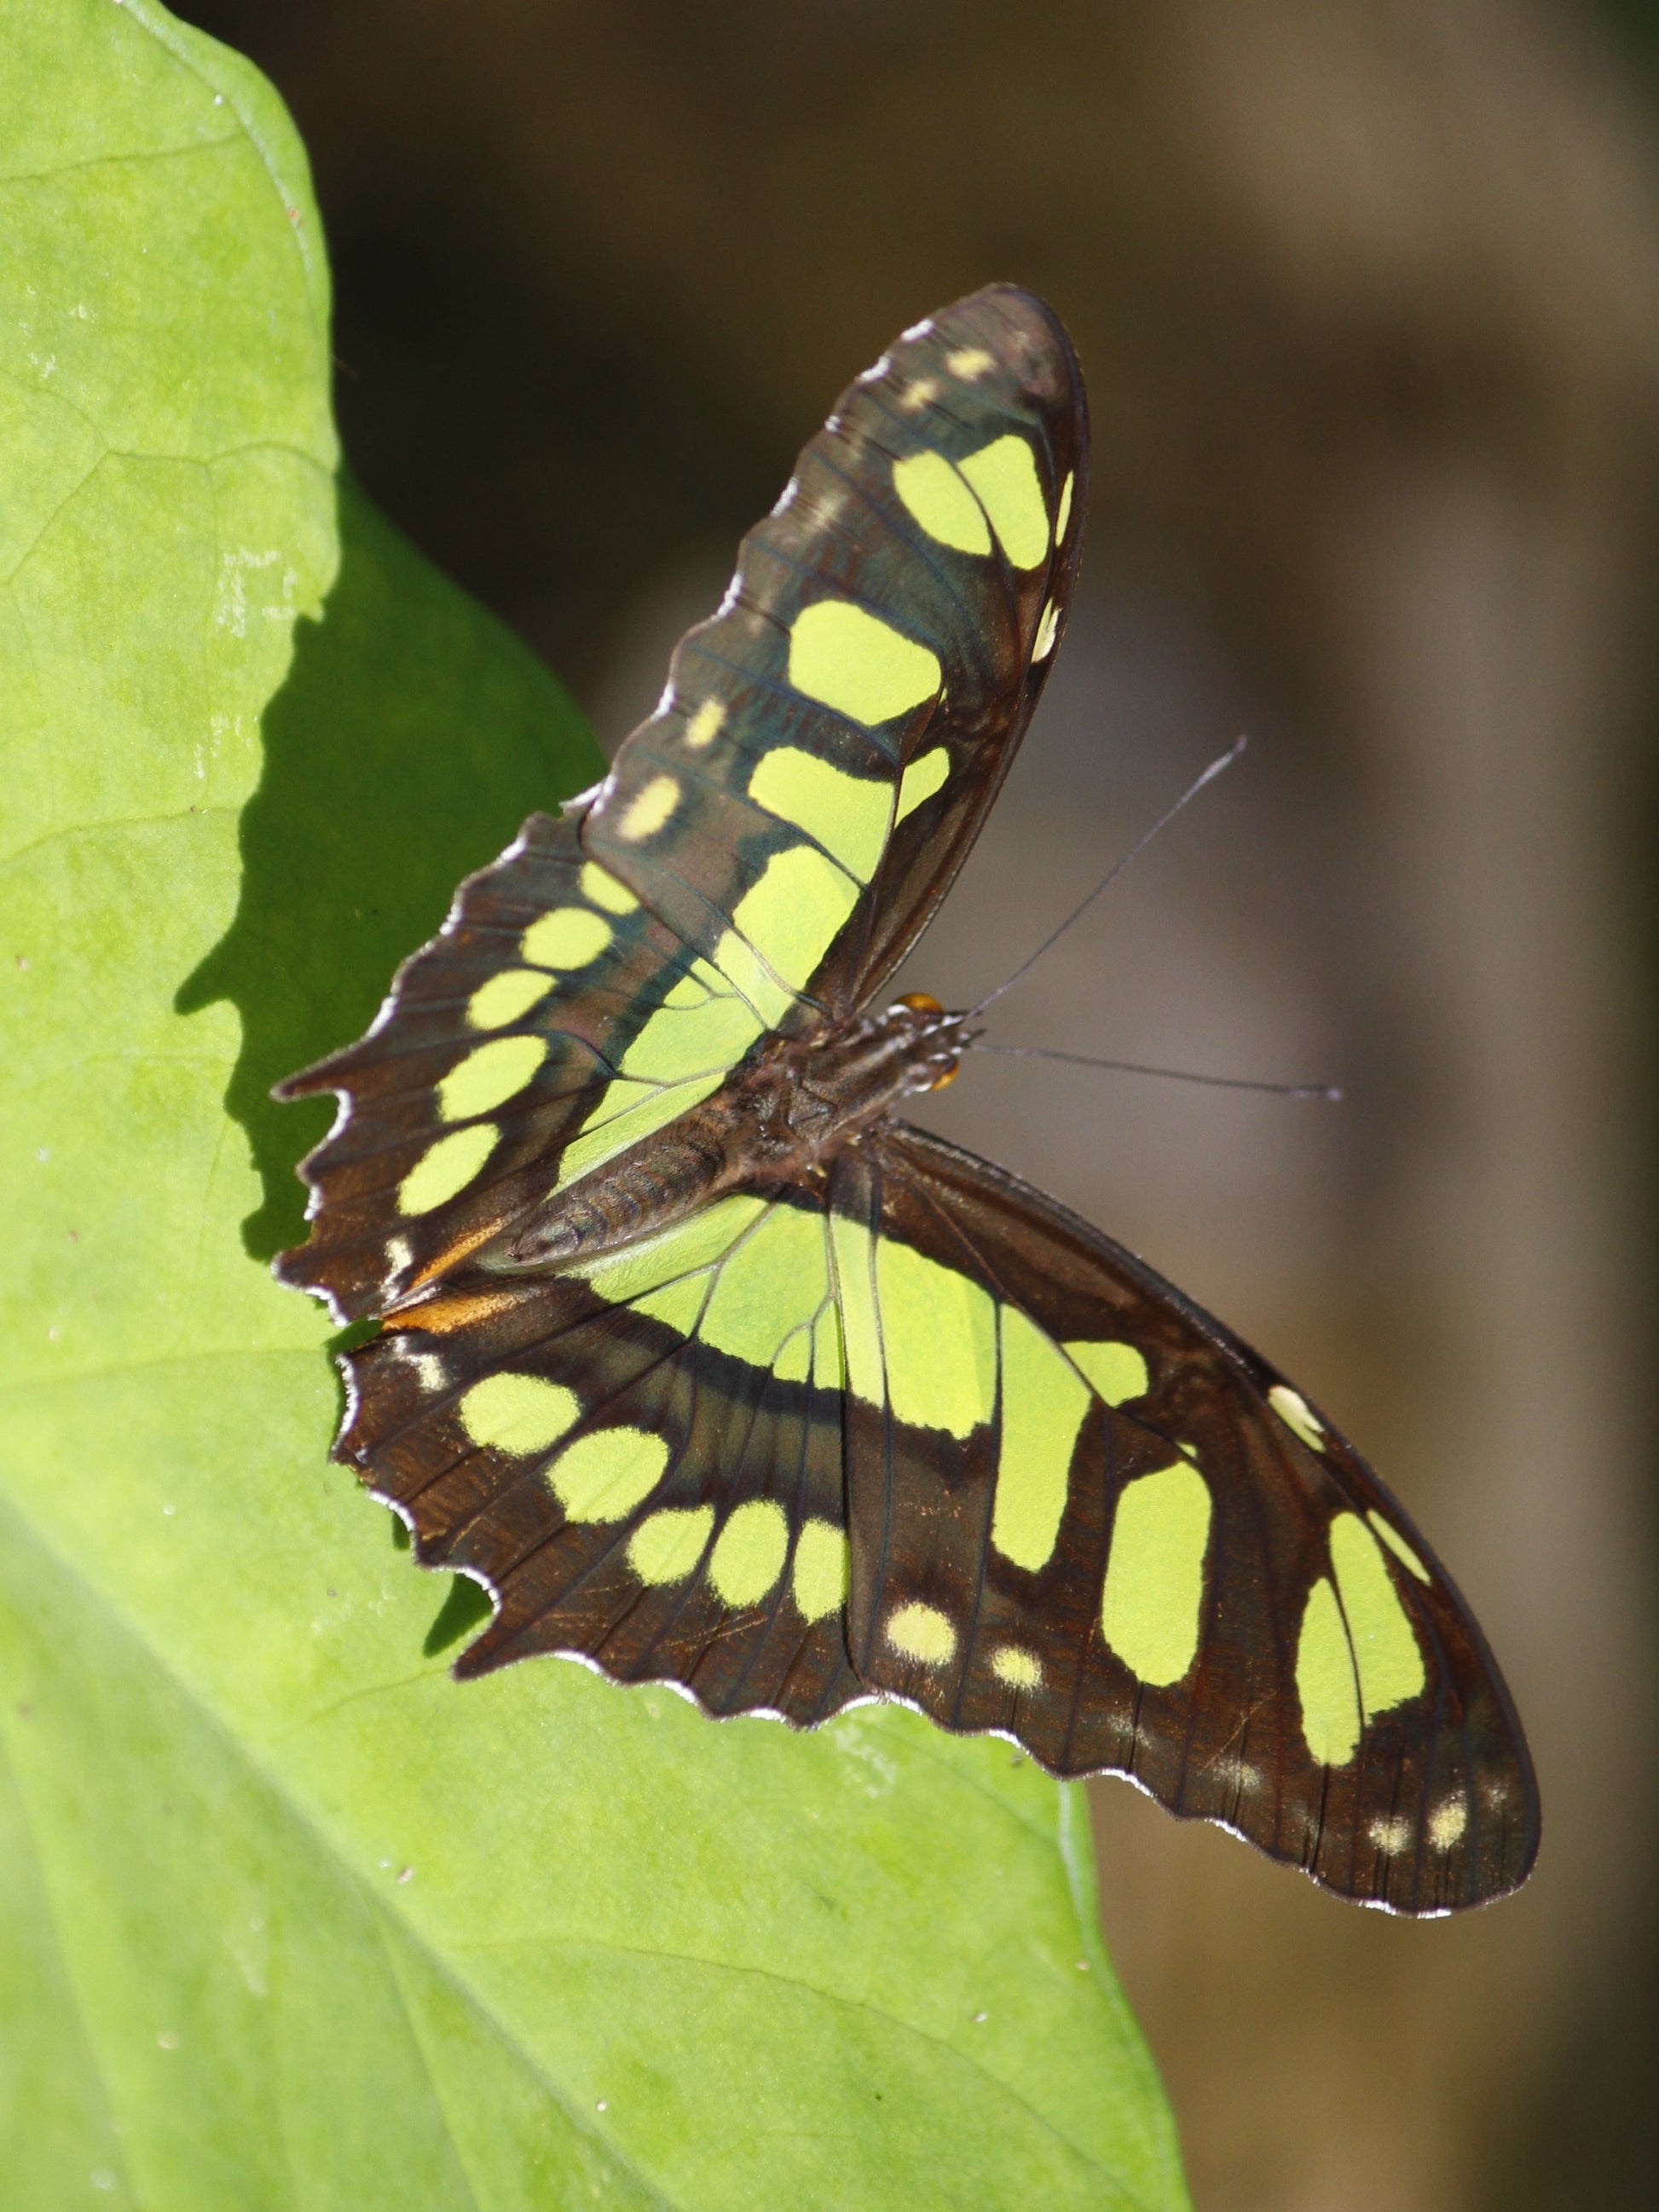 malachite Butterfly uses yarba maravilla " ruellia cocinea" as host plant